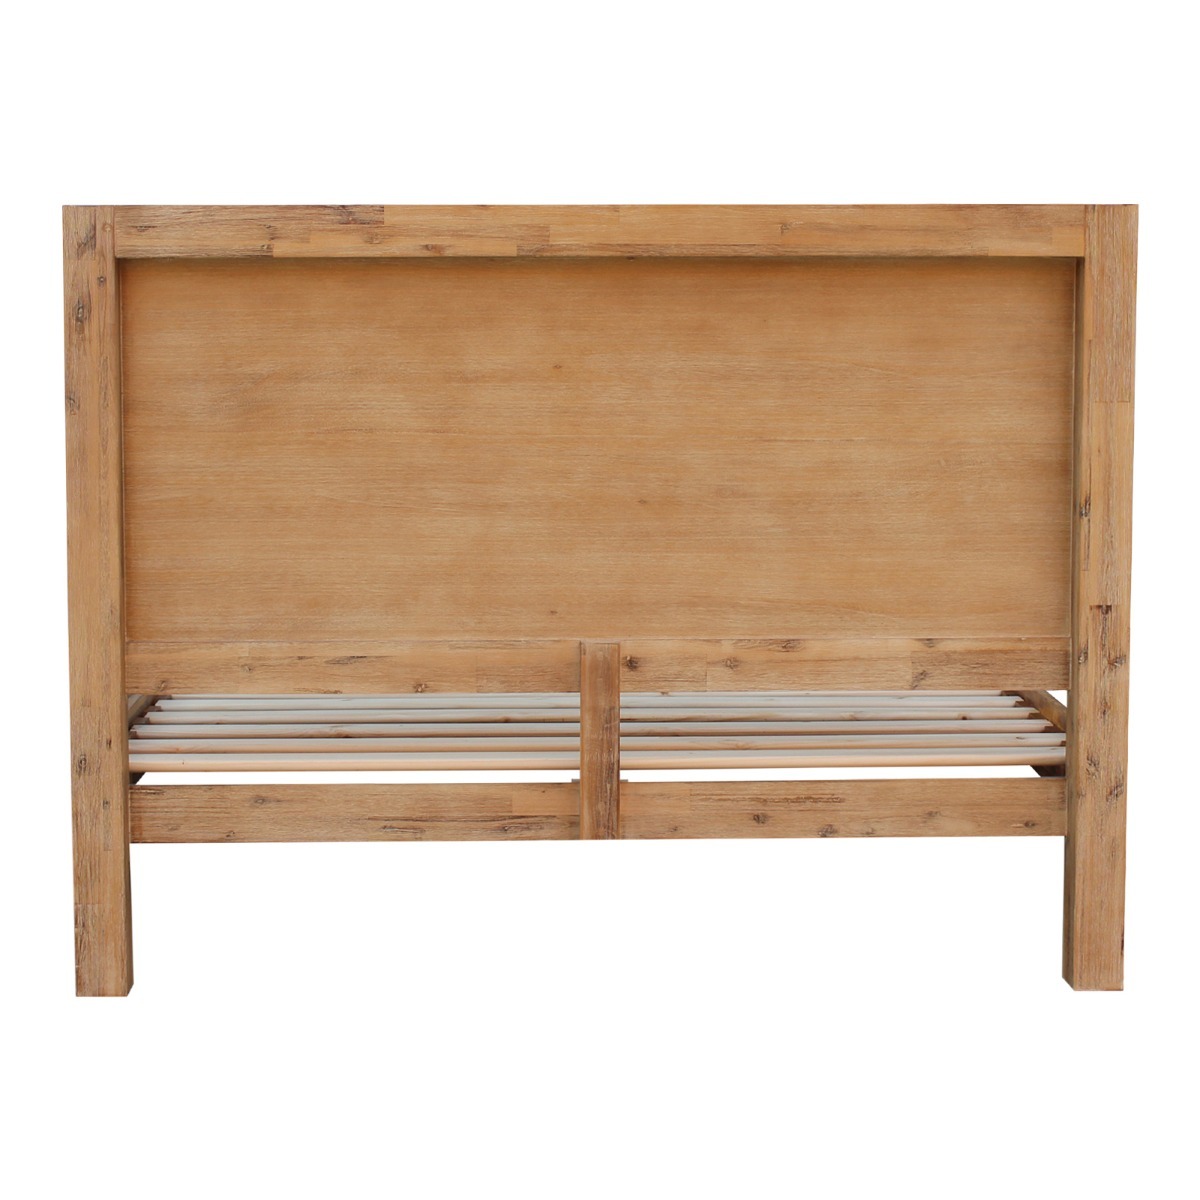 Avon Bed Frame in Solid Wood Veneered Acacia Bedroom Timber Slat – DOUBLE, Oak